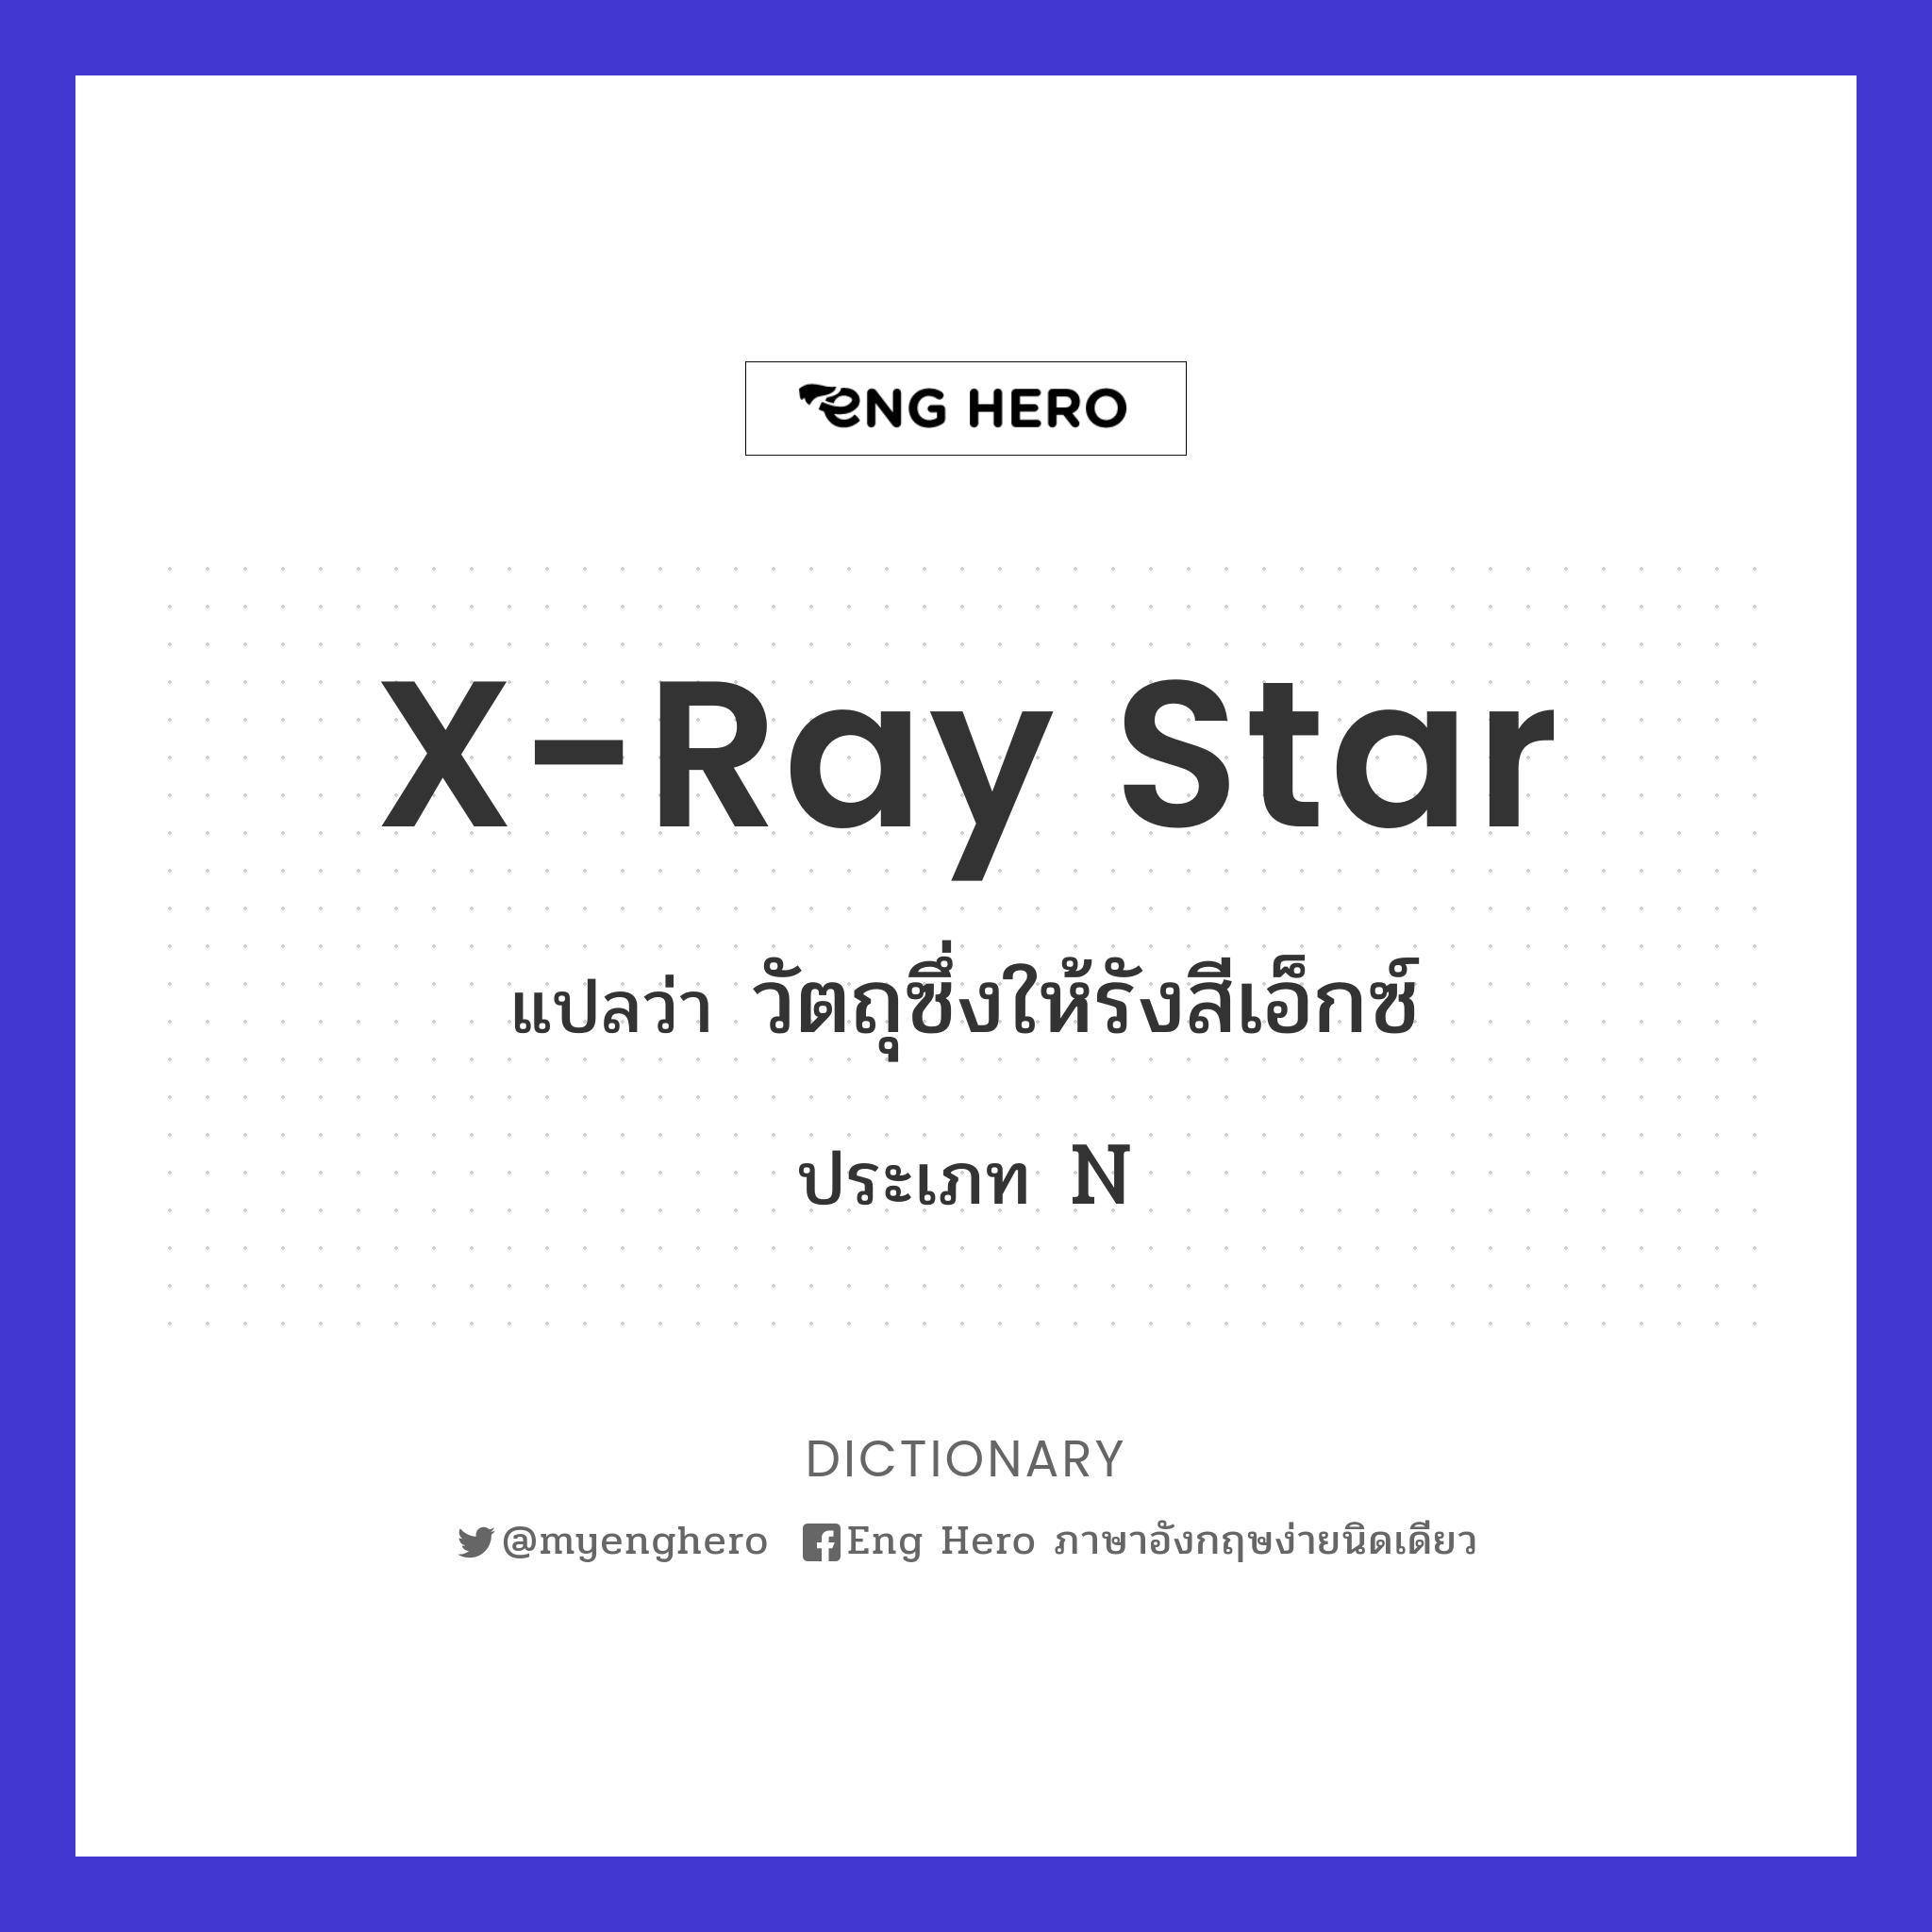 X-ray star